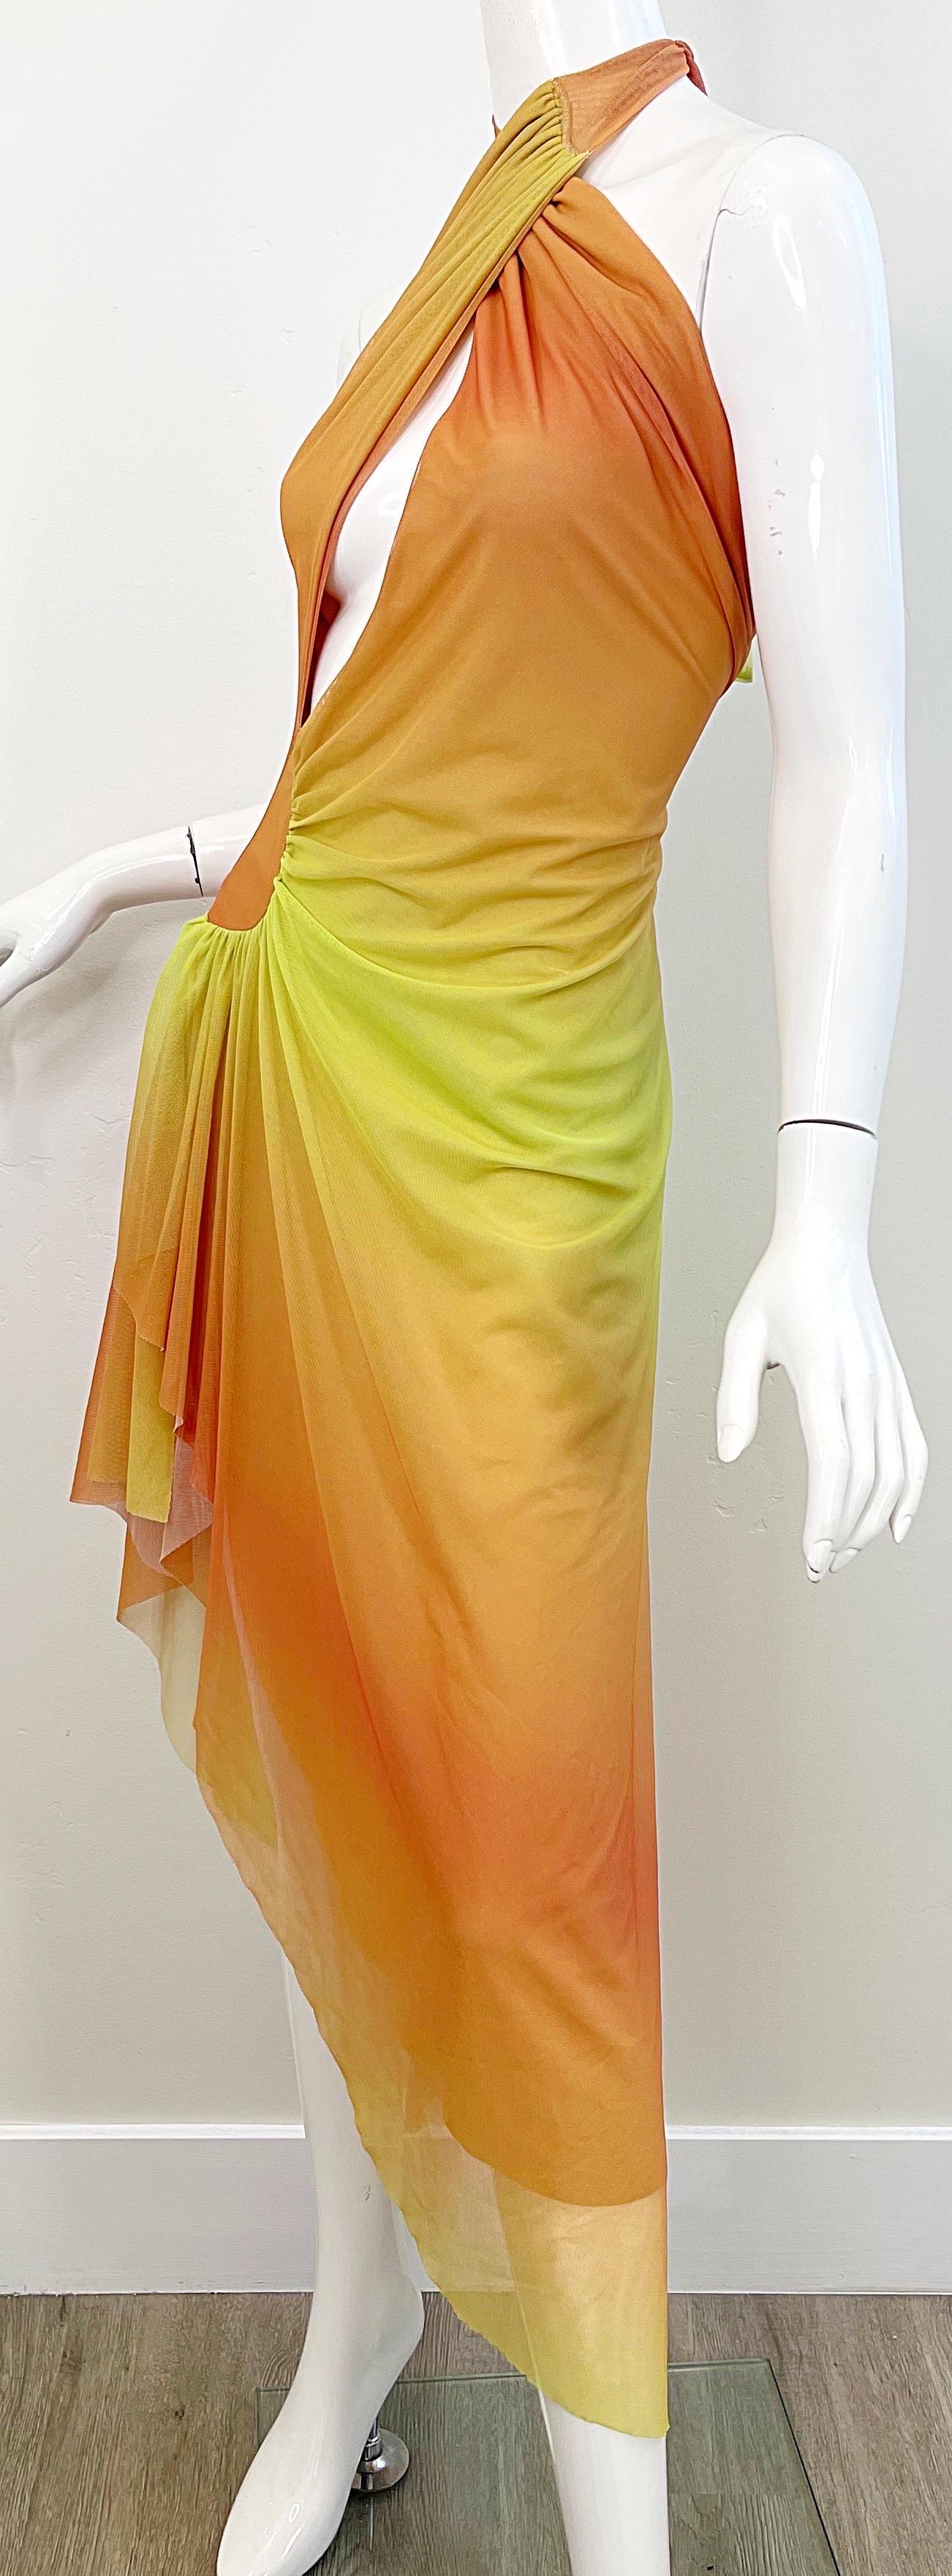 Ema Savahl 2000s Hand Dyed Ombré Orange Yellow Sexy Hi-Lo Halter Dress Y2K For Sale 3